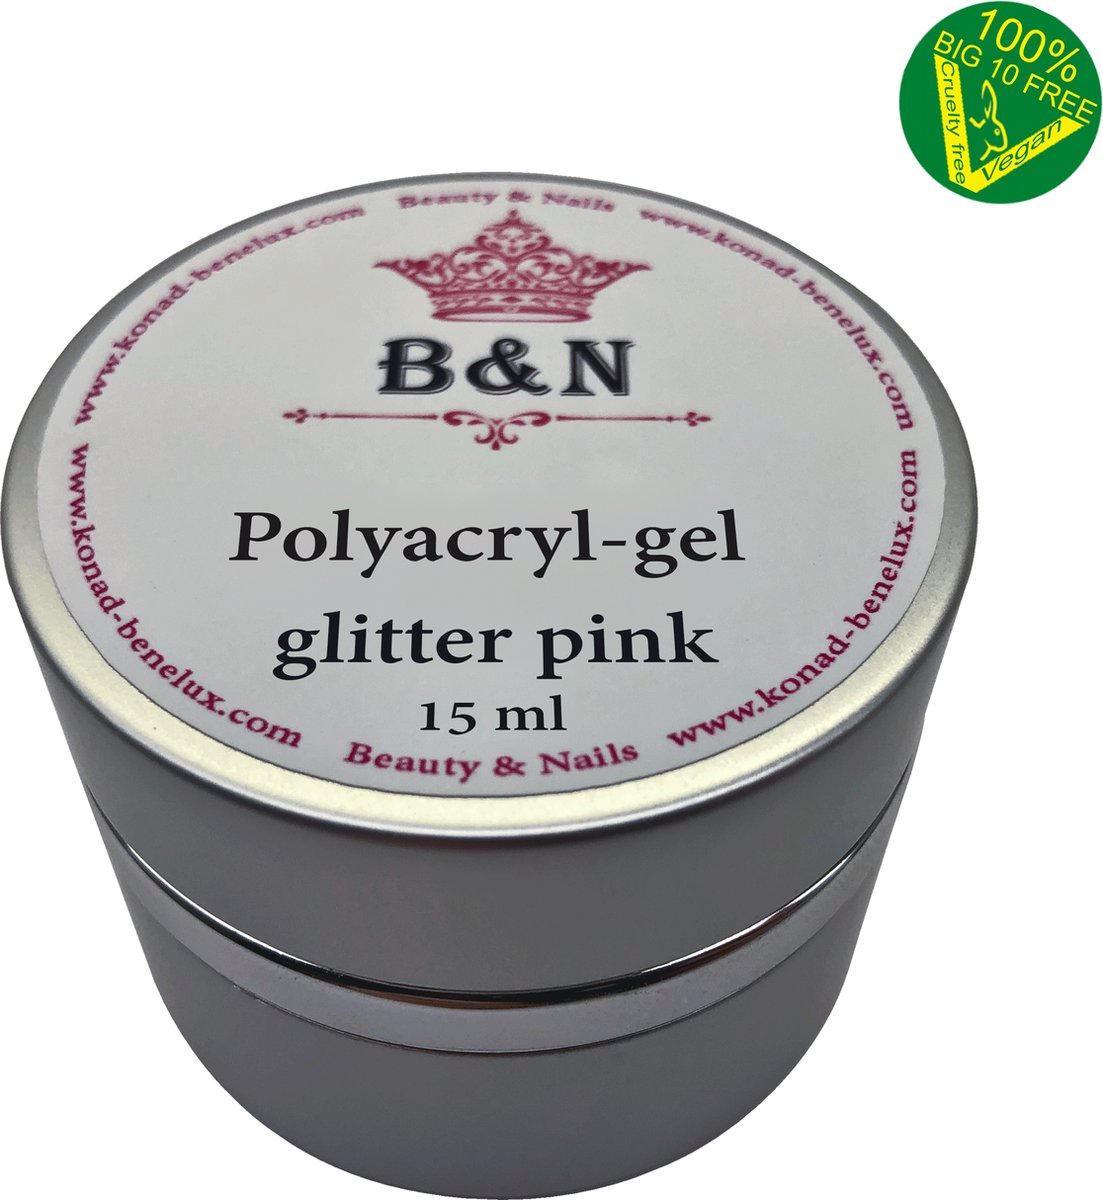 Polyacryl glitter pink - 15 ml | B&N - VEGAN - polygel